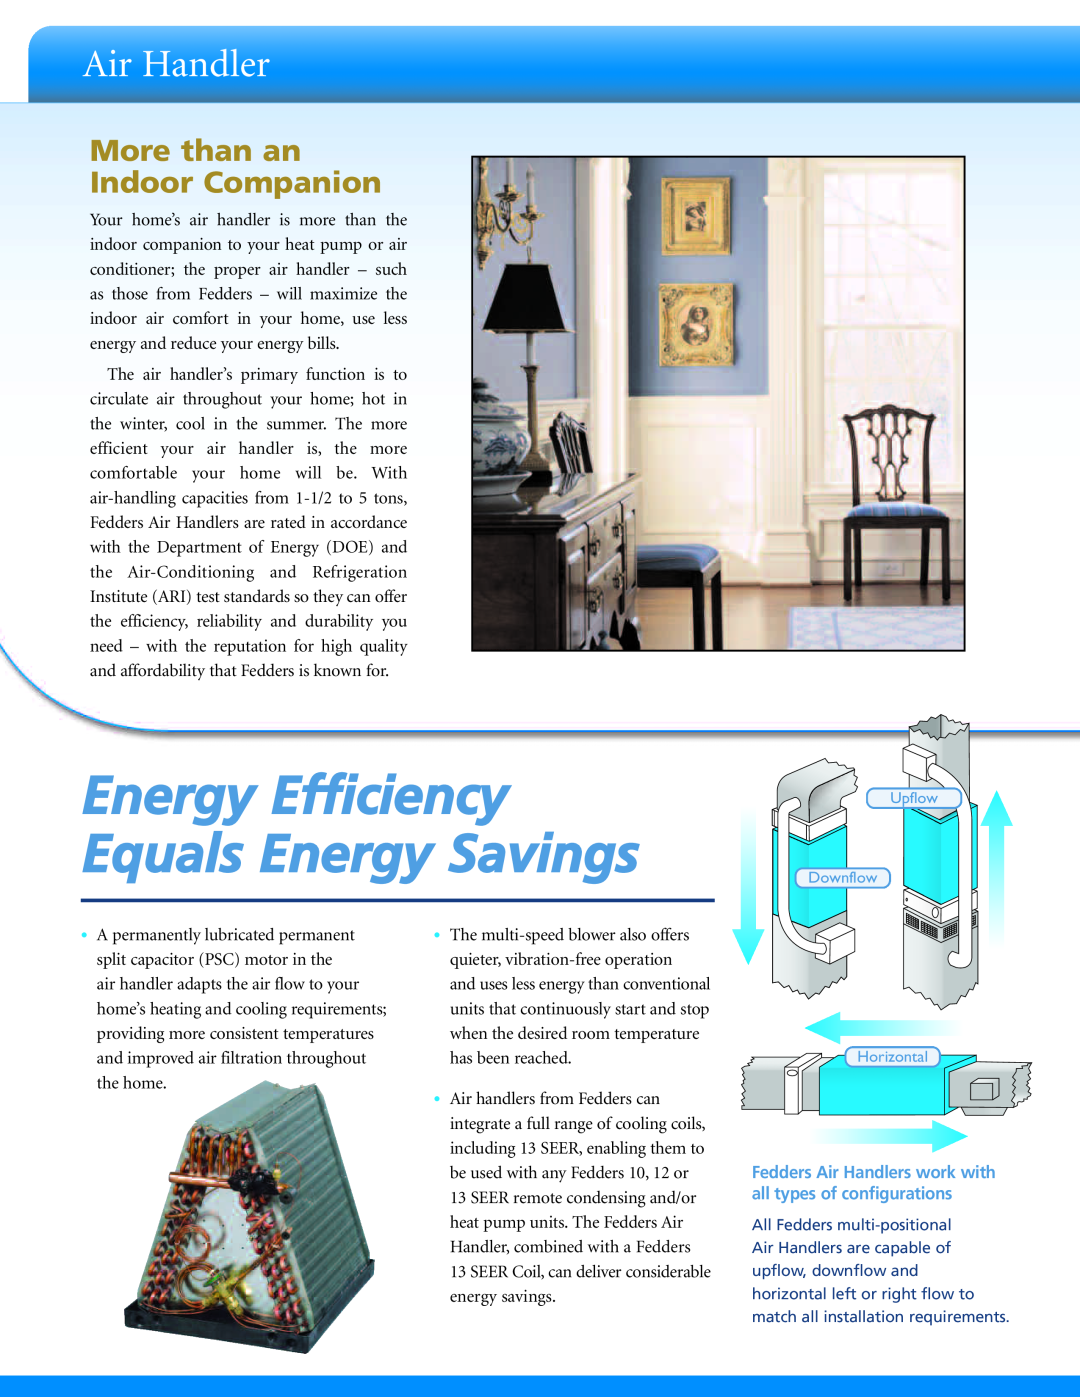 Fedders Air Handler manual Energy Efficiency Equals Energy Savings, More than an Indoor Companion 